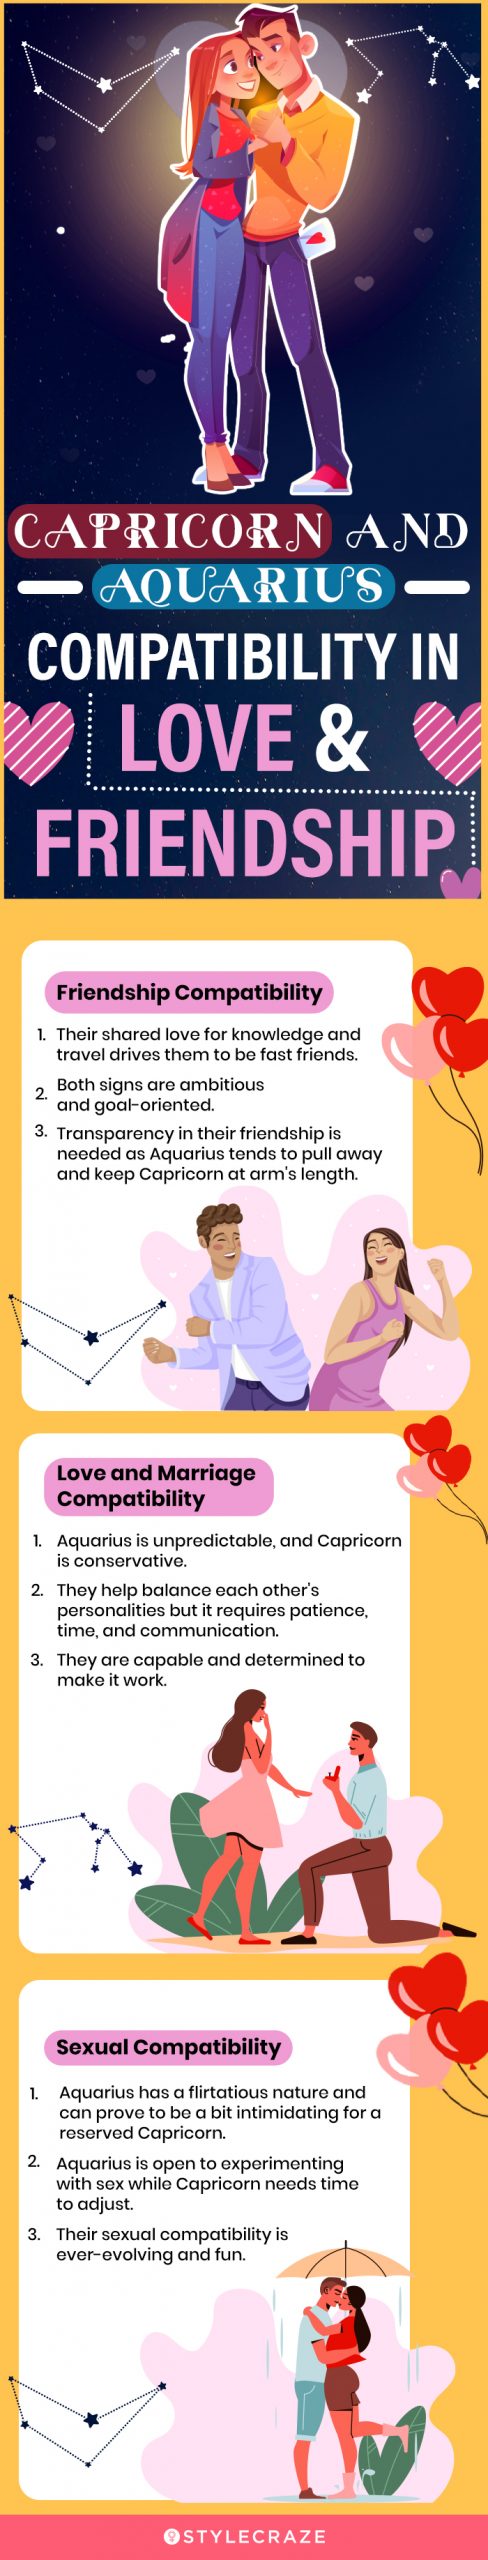 capricorn and aquarius compatibility in love & friendship (infographic)